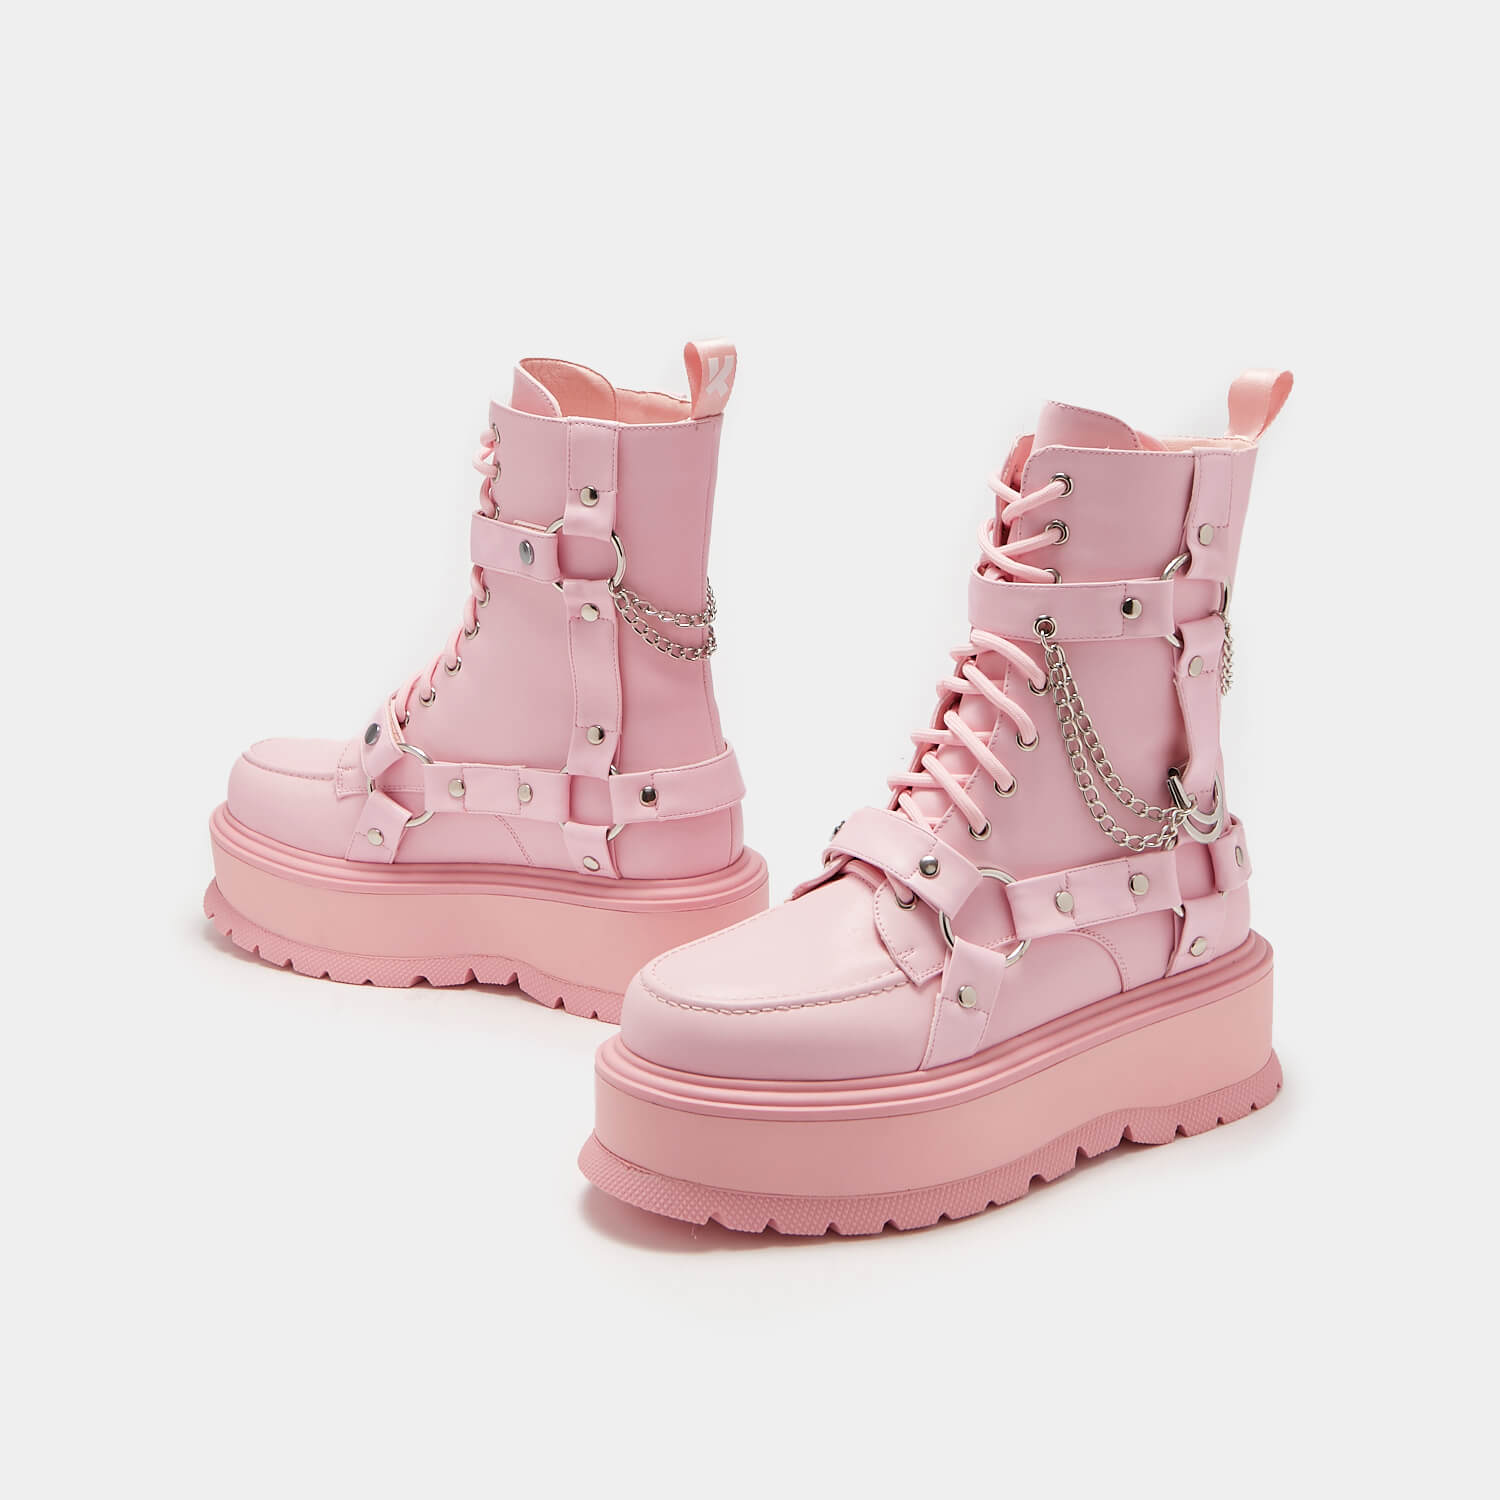 Yami Pastel Pink Platform Boots - Ankle Boots - KOI Footwear - Pink - Three-Quarter View